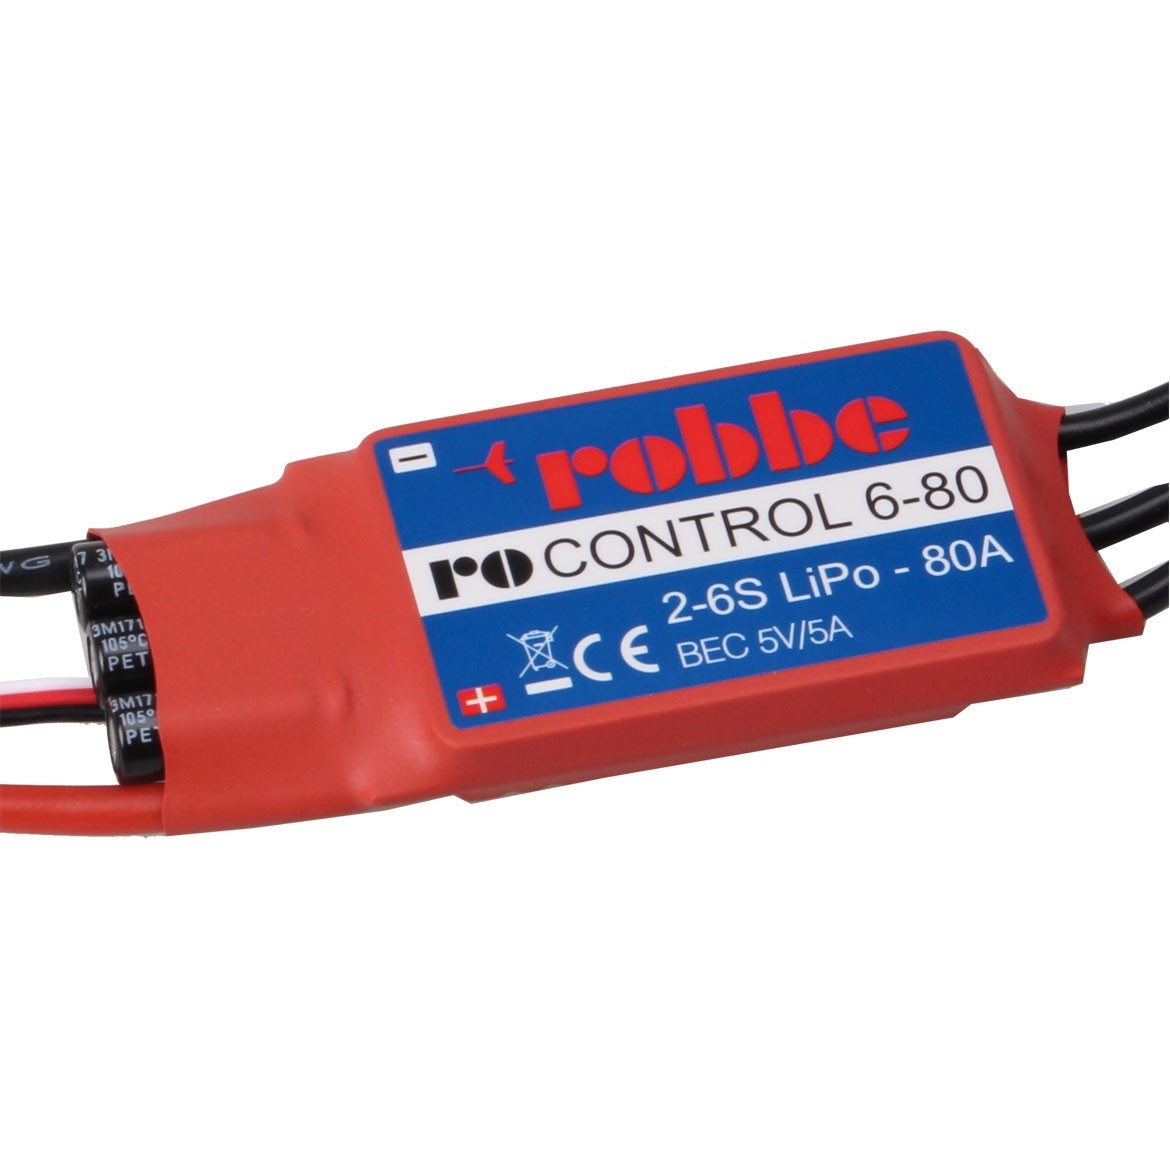 RO-CONTROL 6-80 2-6S -80(100A) BRUSHLESS REGLER 5V/5A BEC